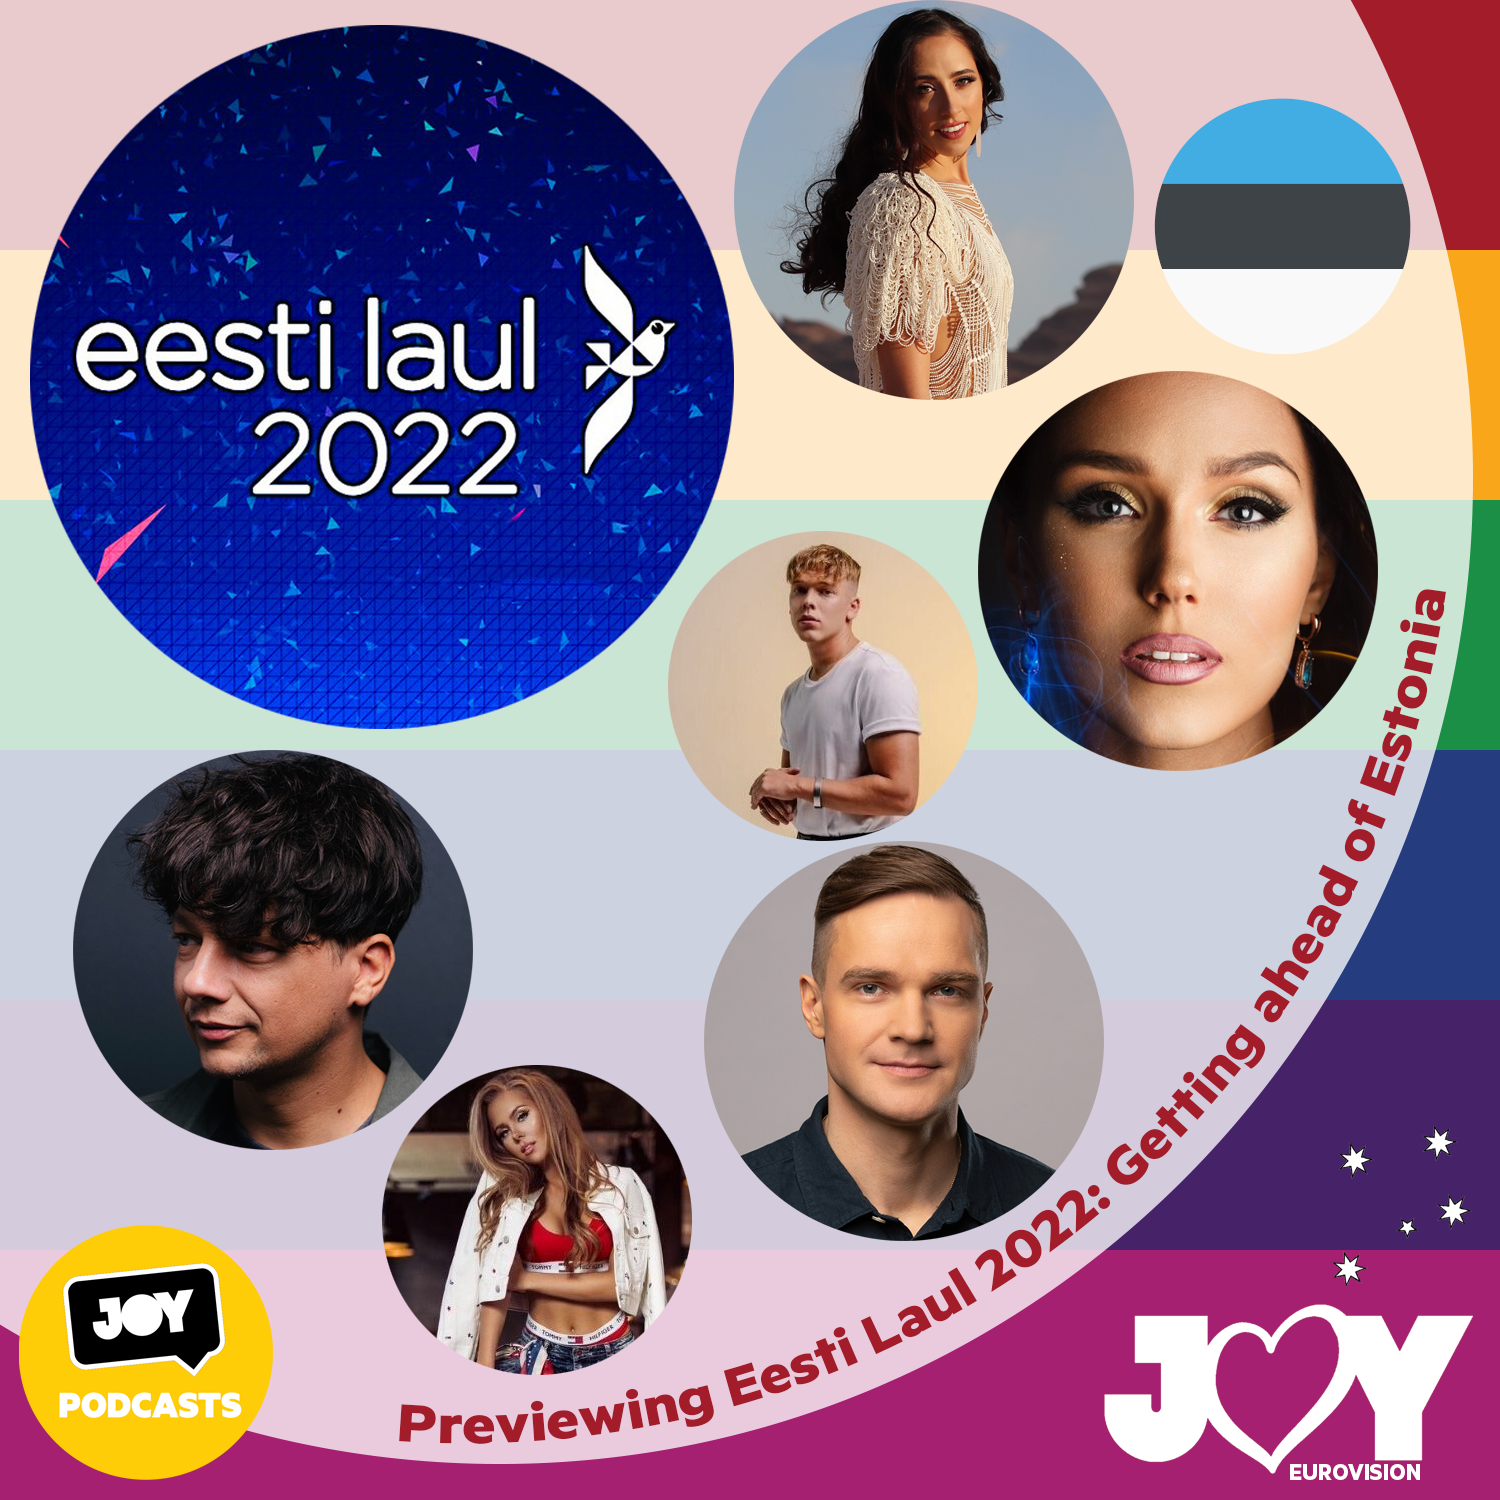 🇪🇪 Previewing Eesti Laul 2022: Getting ahead of Estonia